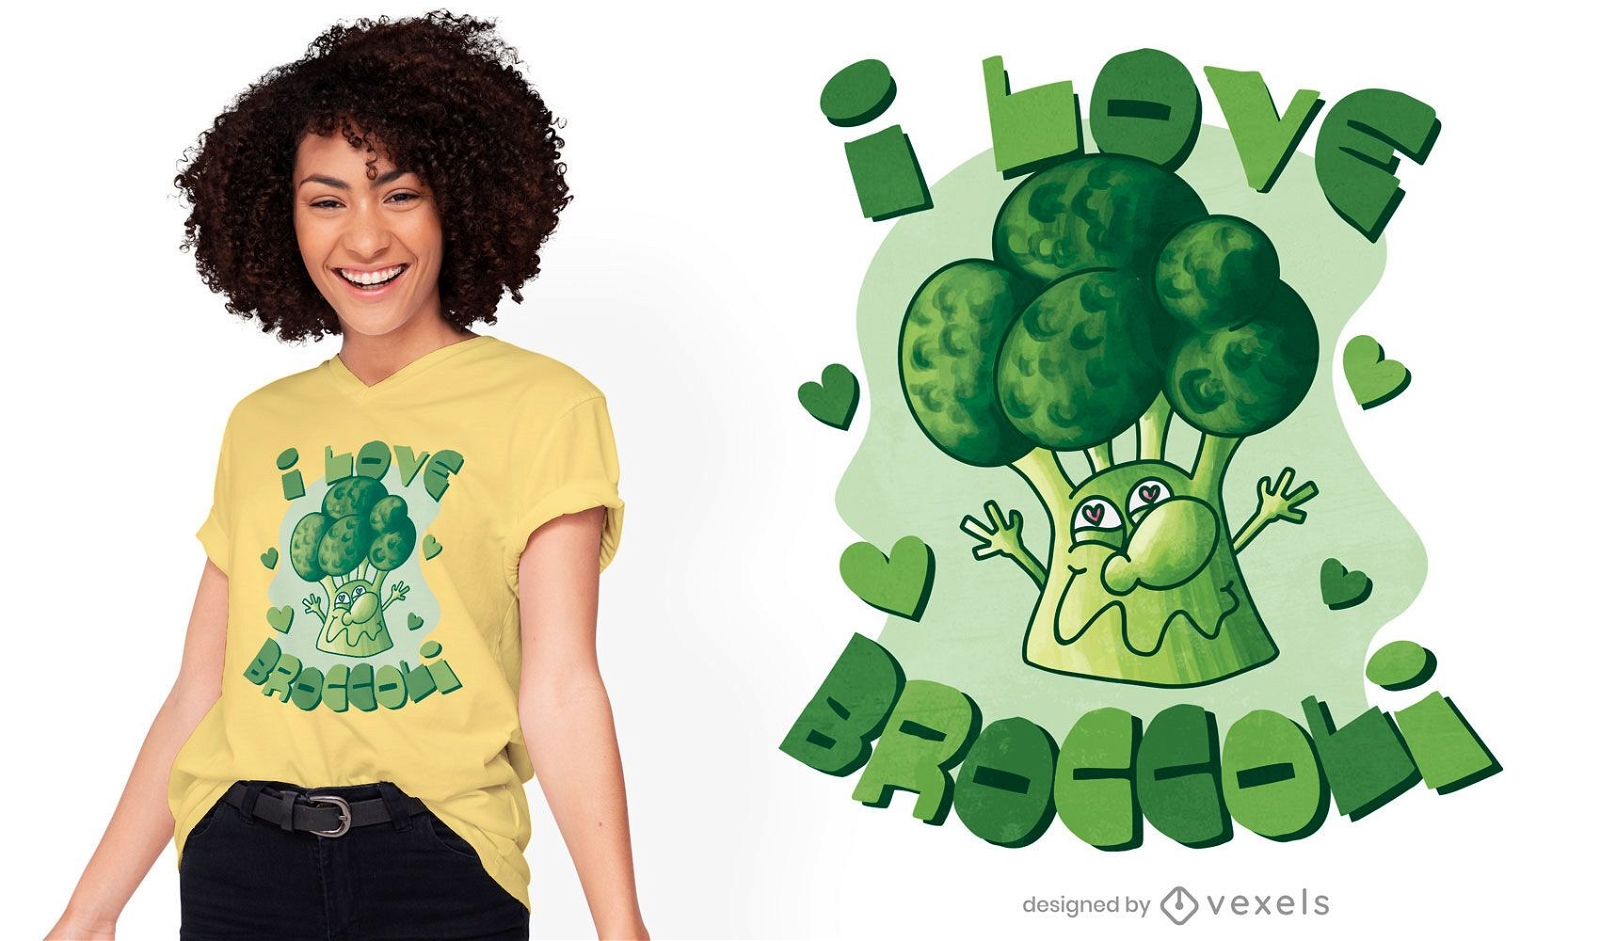 Broccoli lover t-shirt design